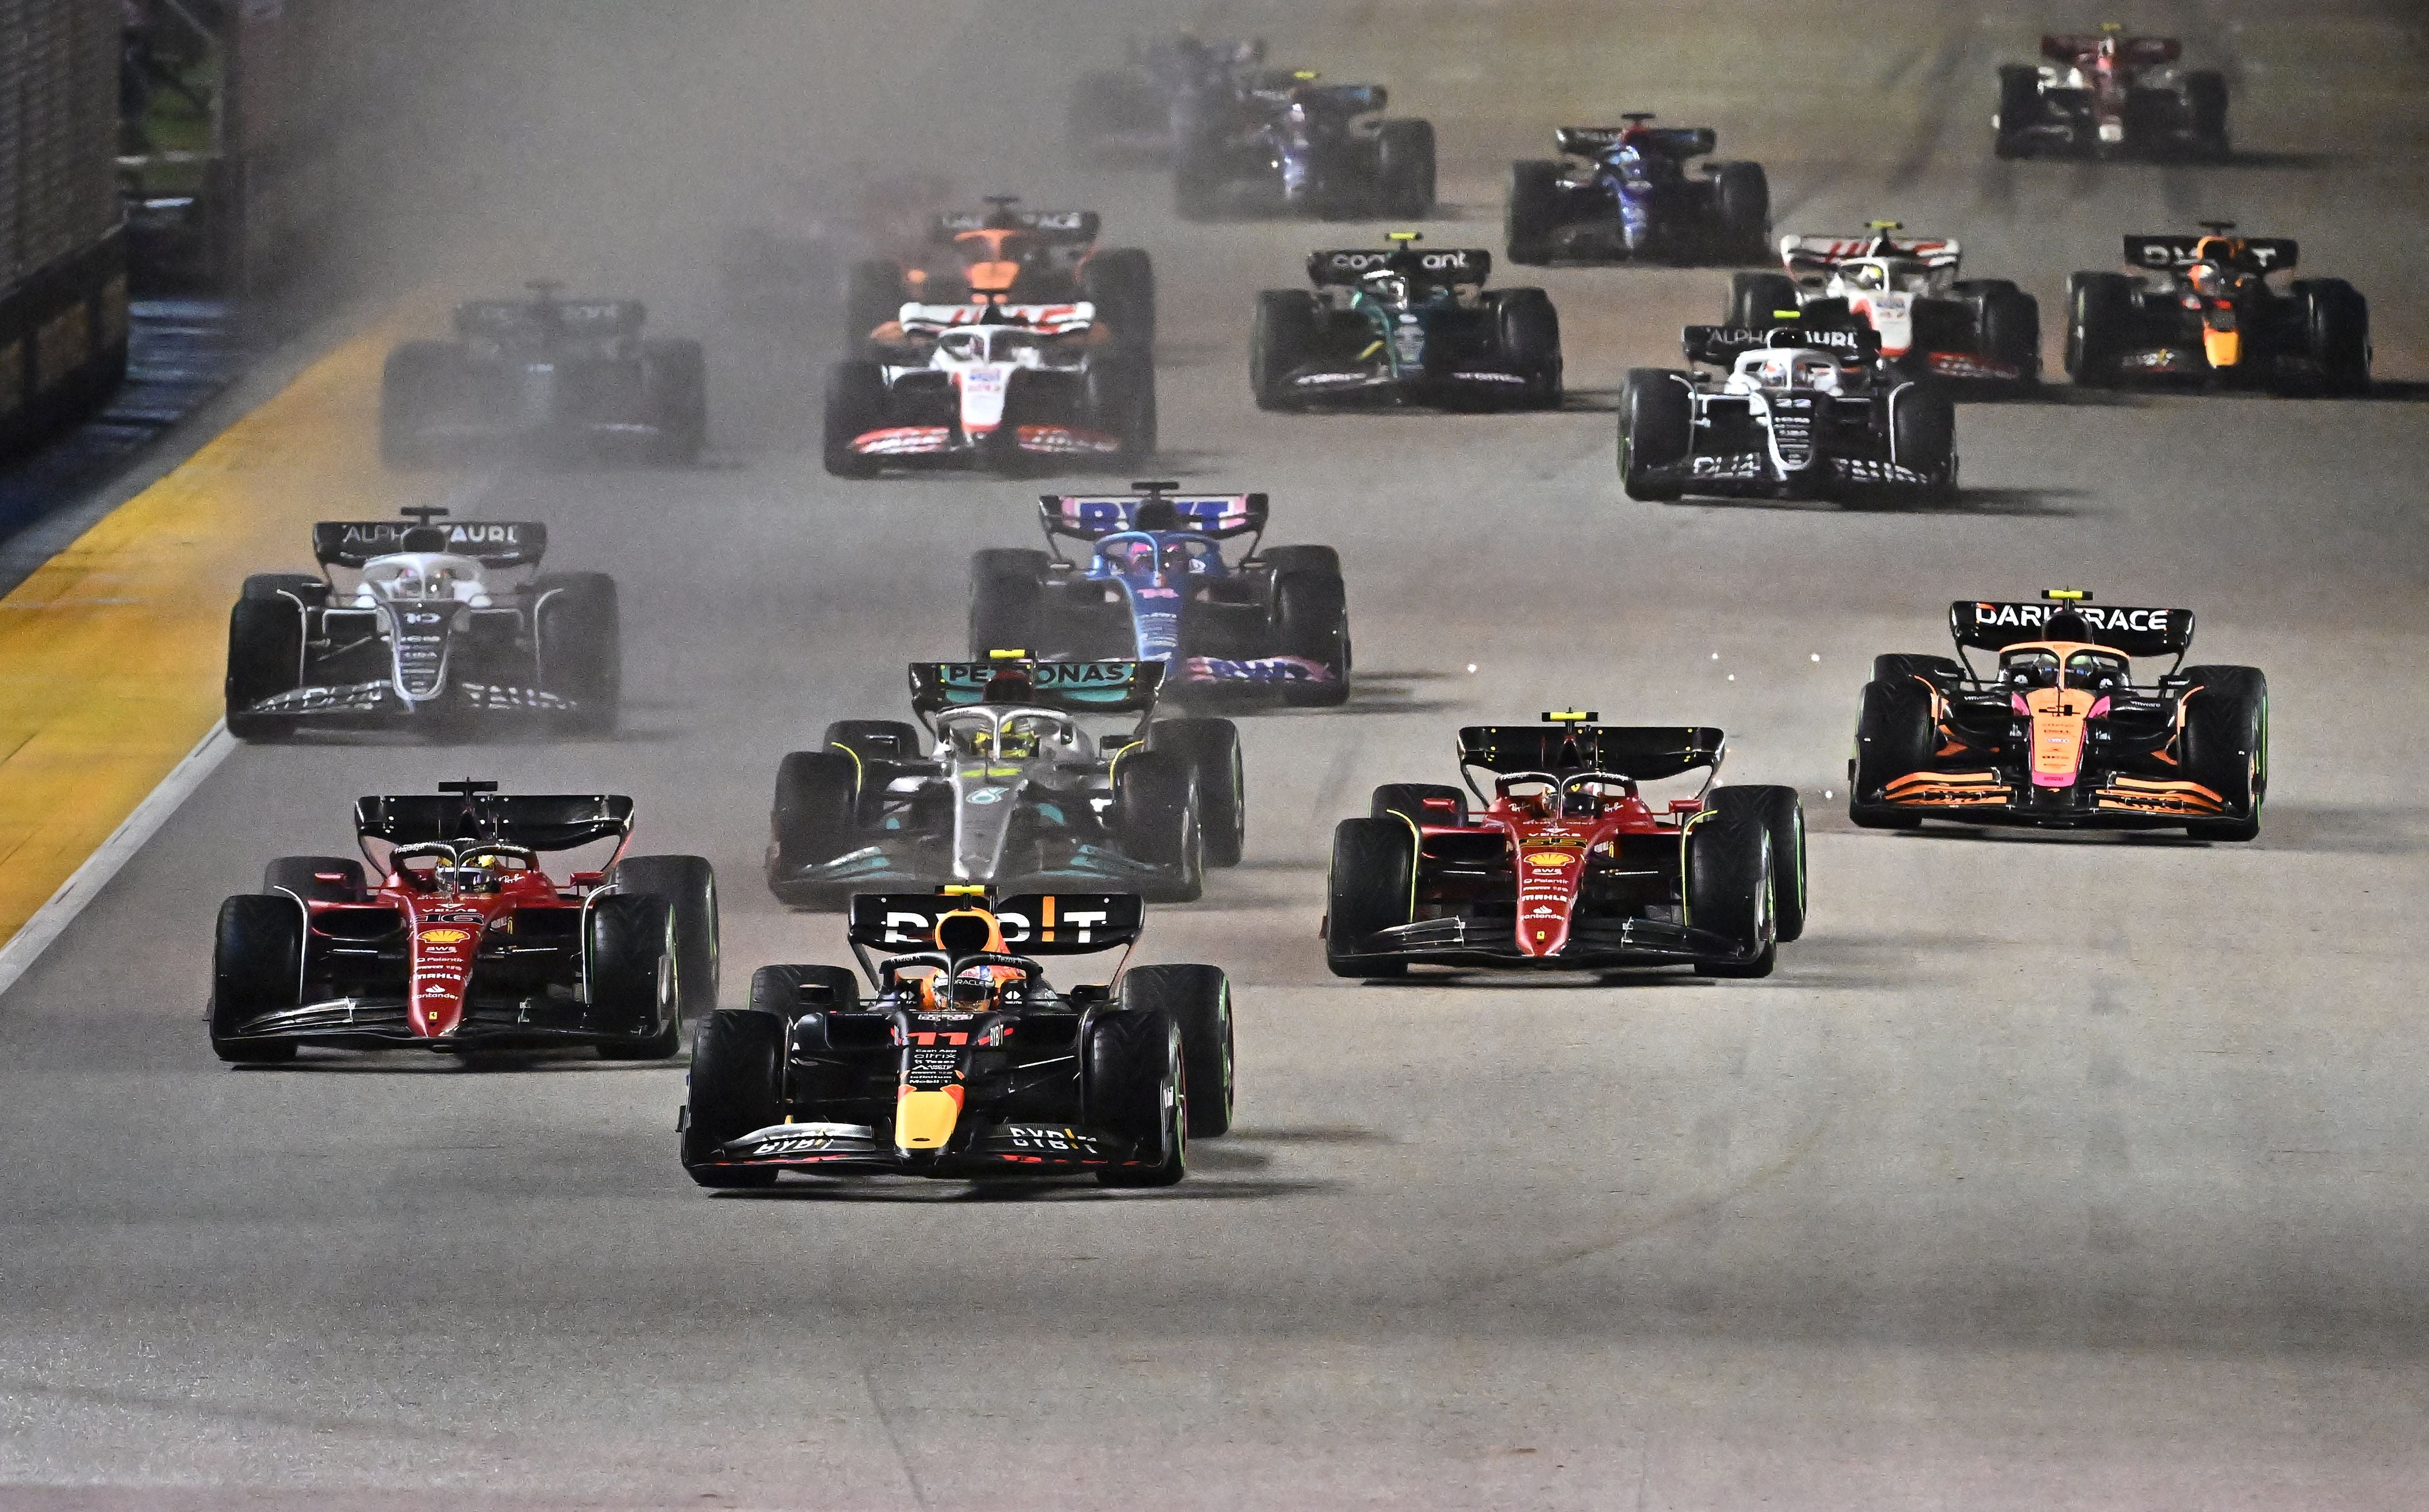 Sergio Perez won Sunday’s chaotic rain-hit Singapore Grand Prix